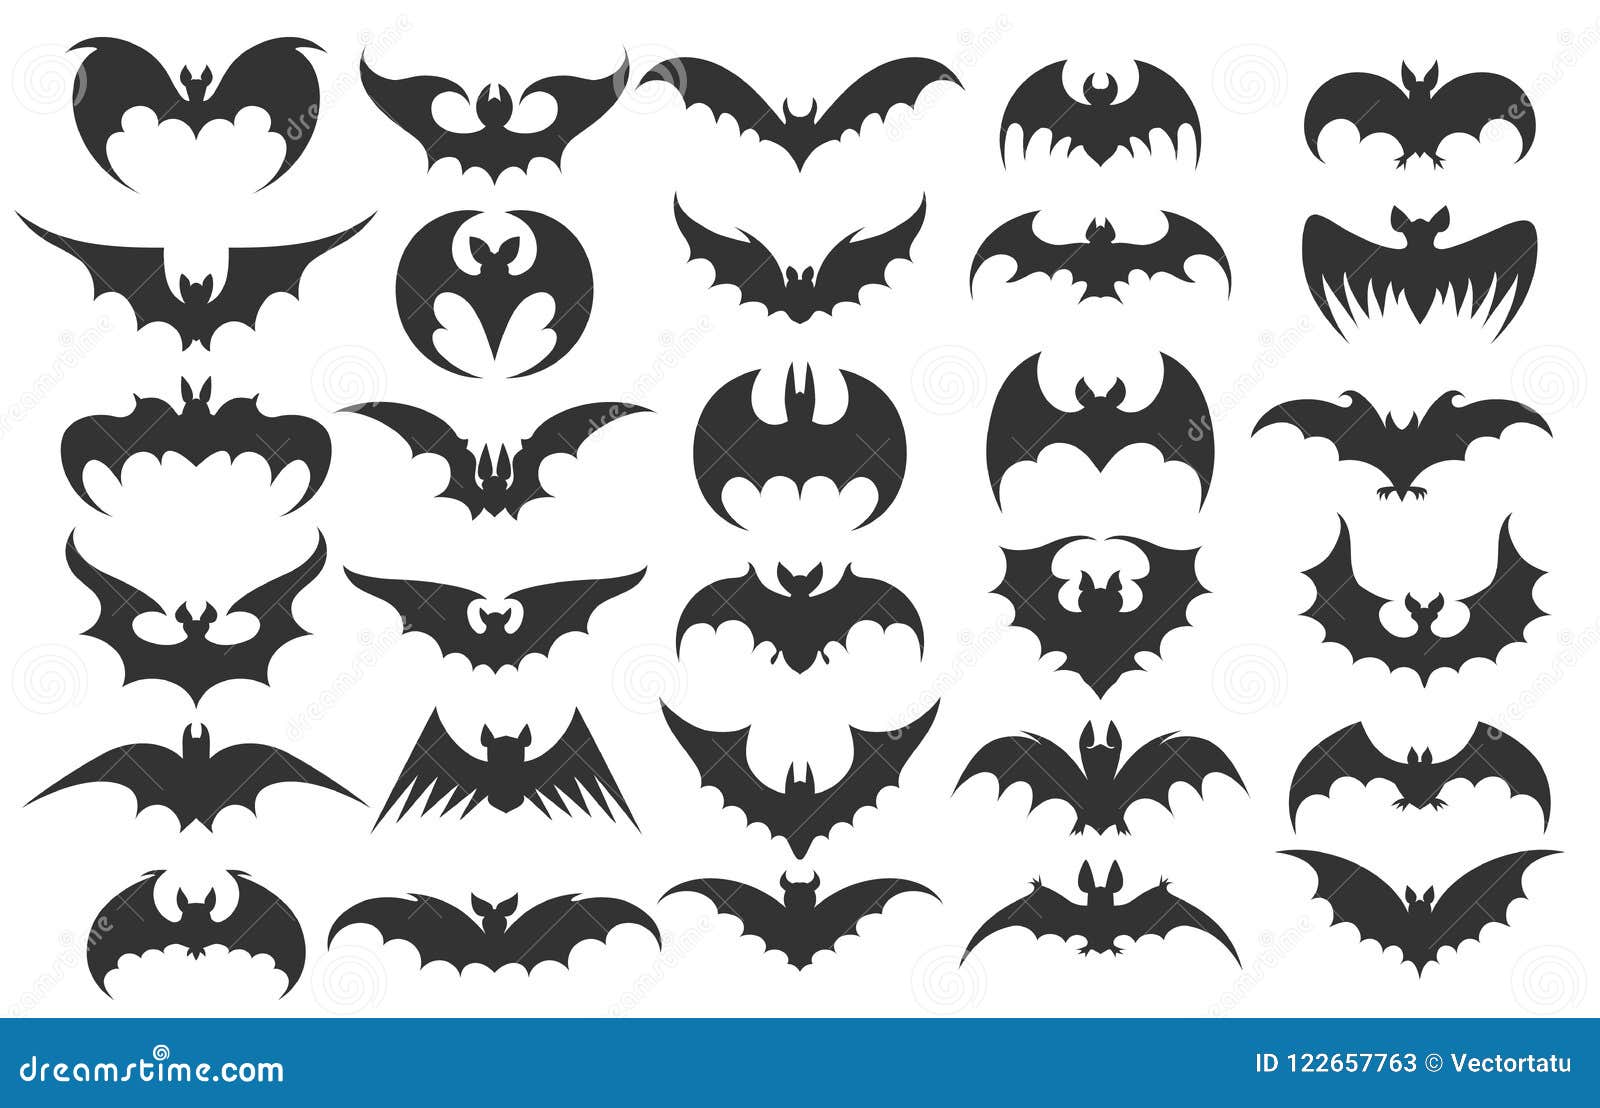 halloween bat icons